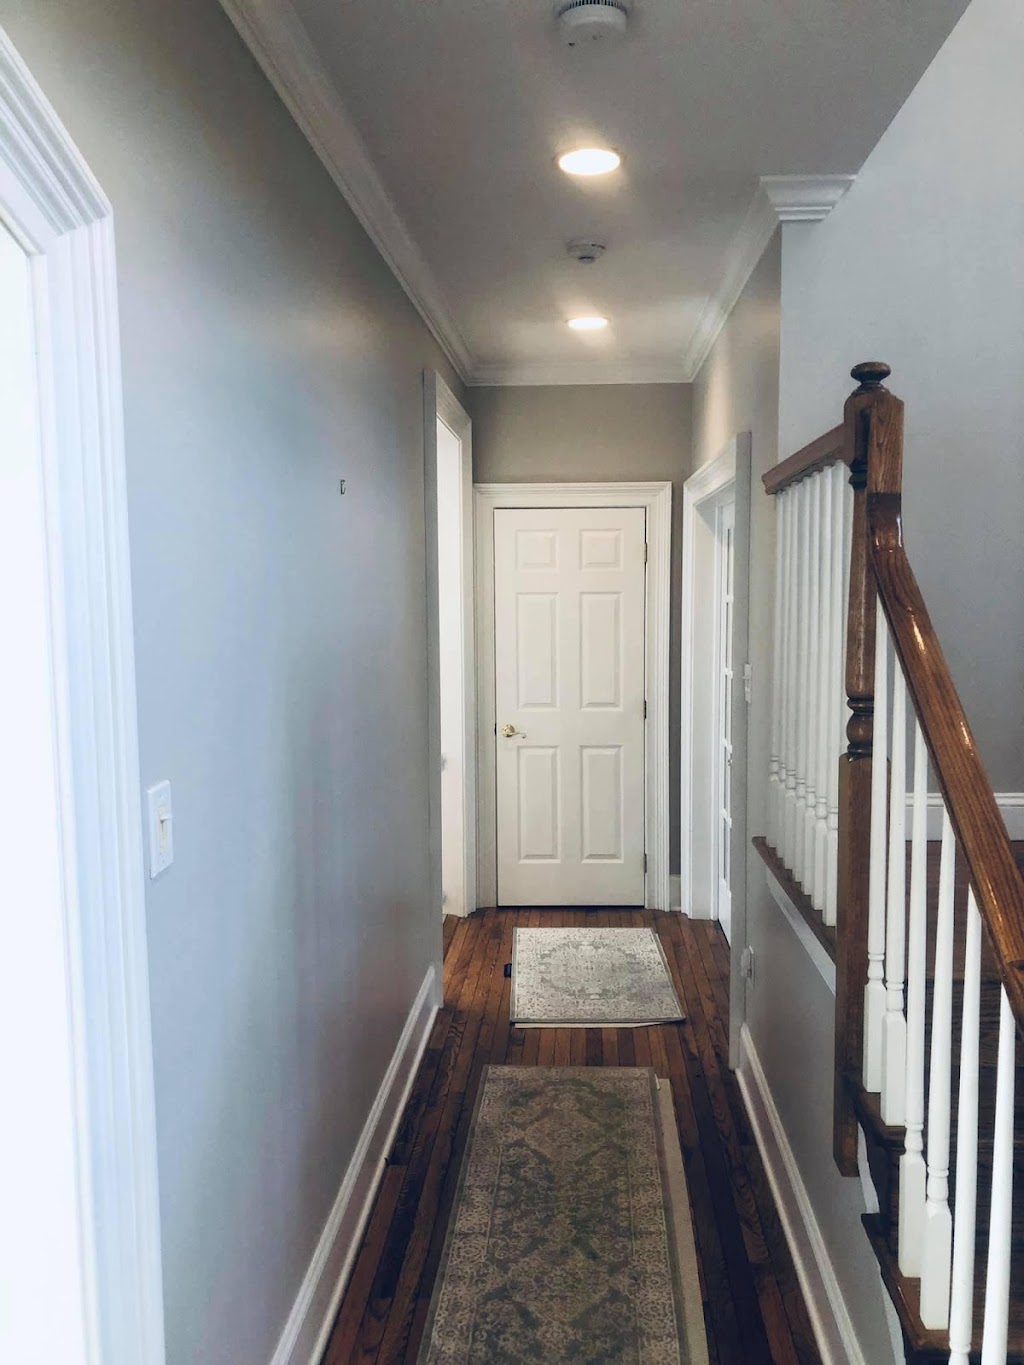 Vidal Home Improvement | 1910 Limestone Rd, Wilmington, DE 19804 | Phone: (302) 377-5350